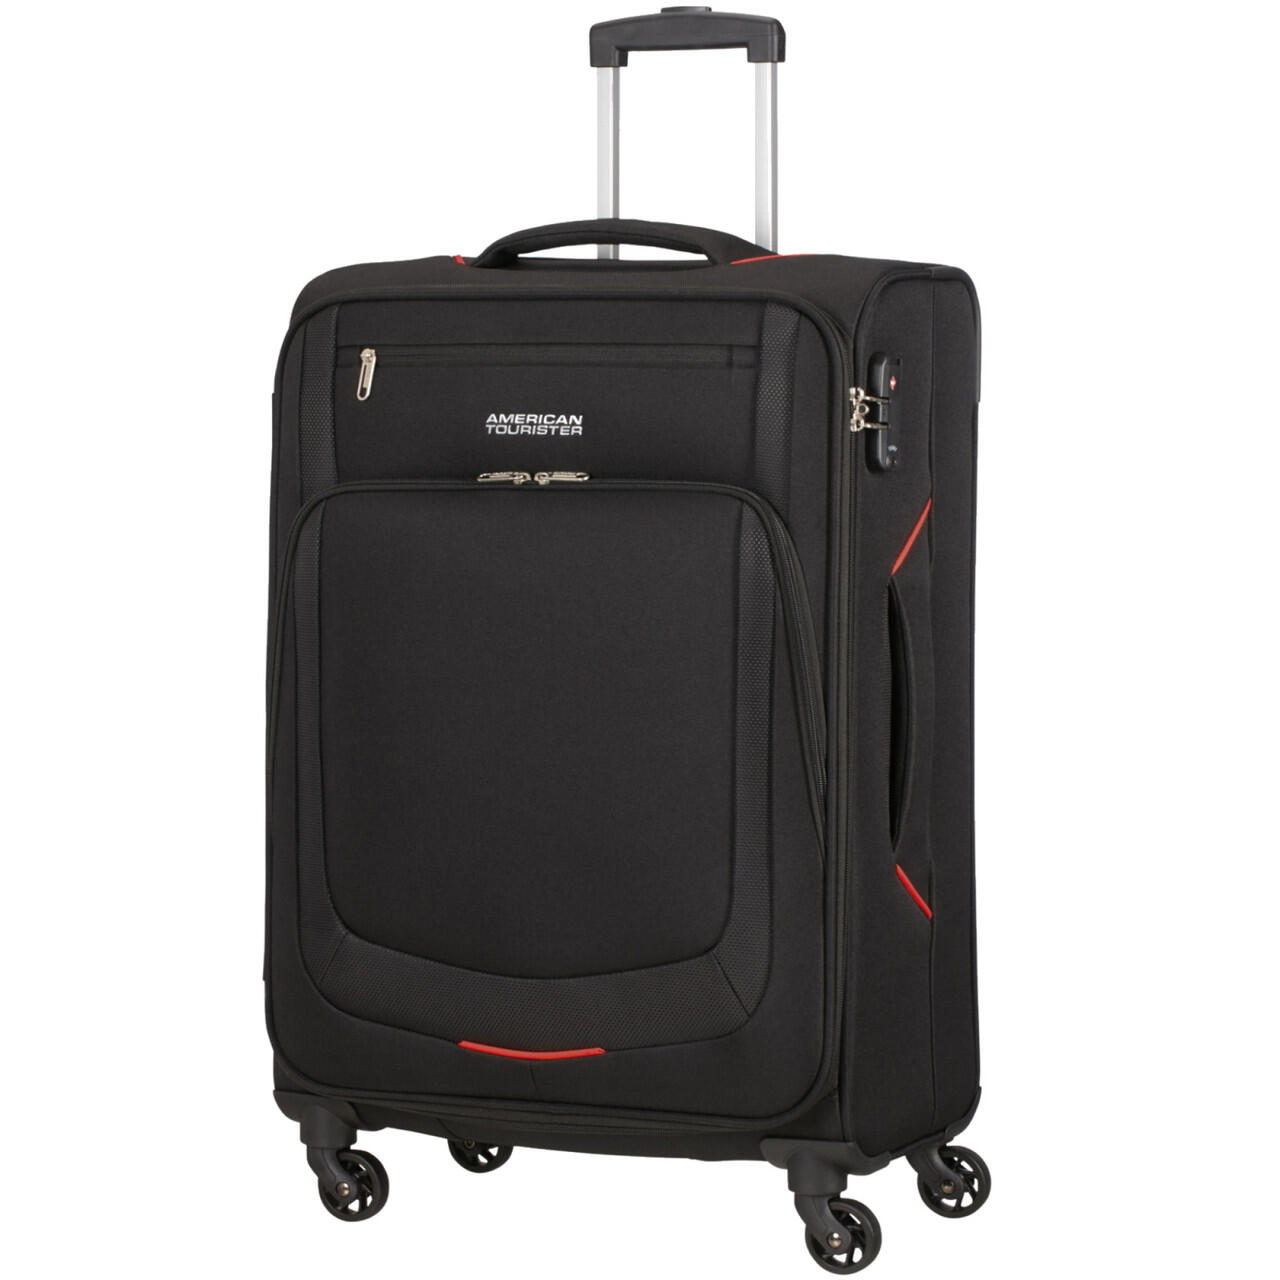 Summer Session Large Suitcase - 80cm - Black/Red 1/6